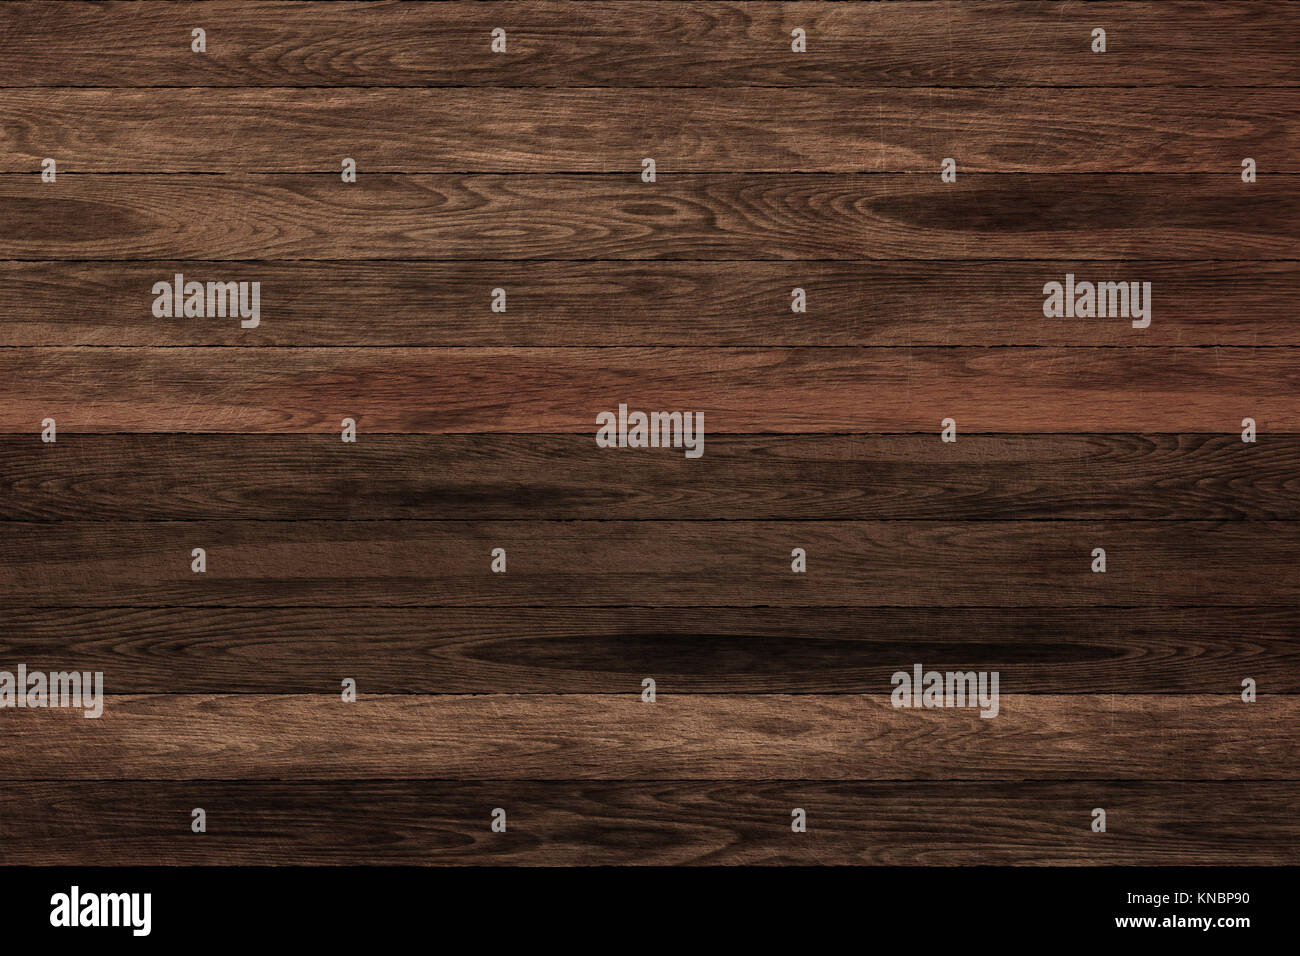 Dark grunge wood panels. Planks Background. Old wall wooden vintage floor Stock Photo